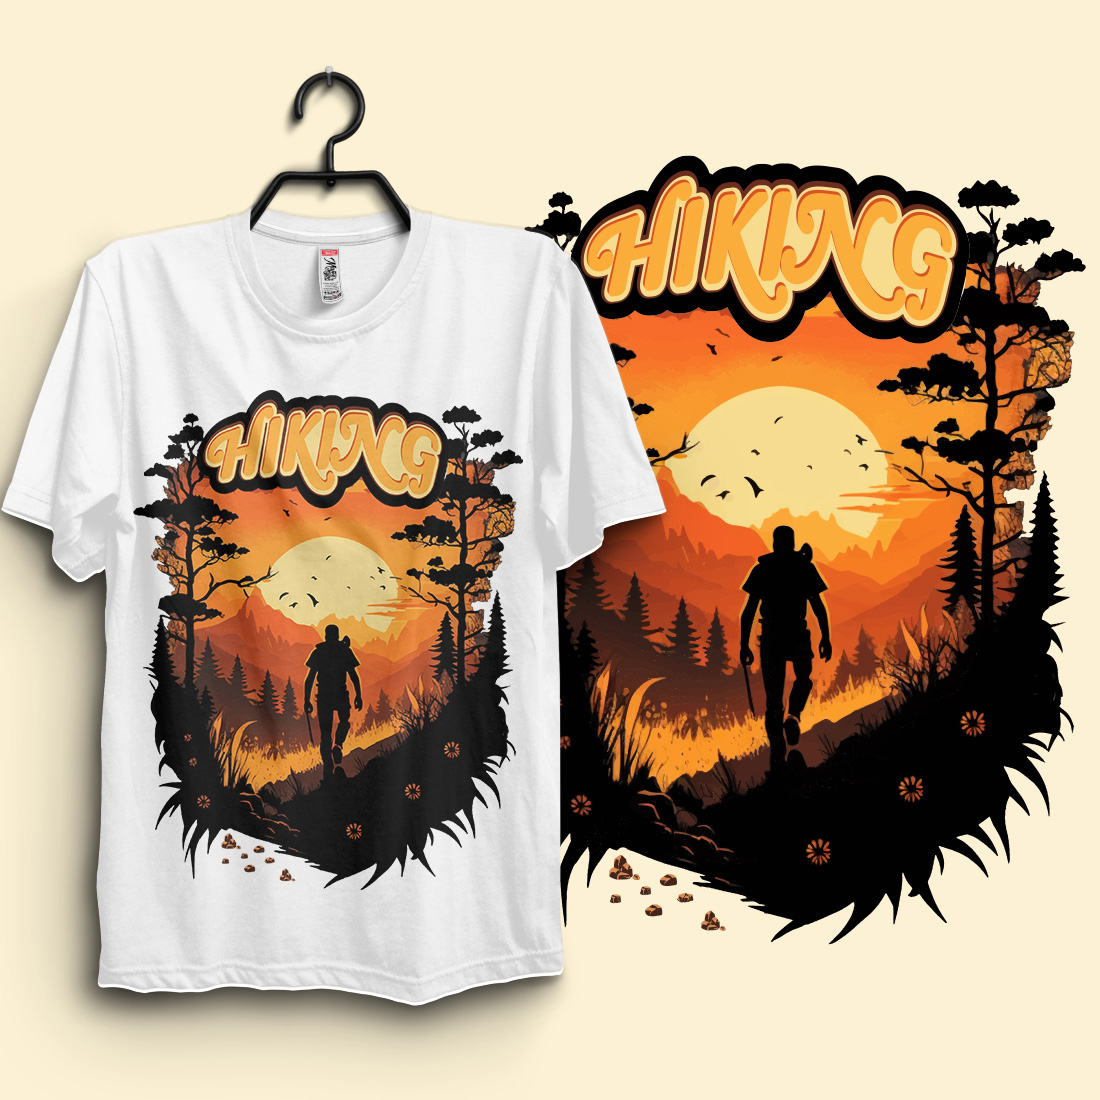 Hiking T-shirt Design, Best Hiking t shirt, Hiking mountain forest retro  vintage t shirt design, Adventure, travel, hiking